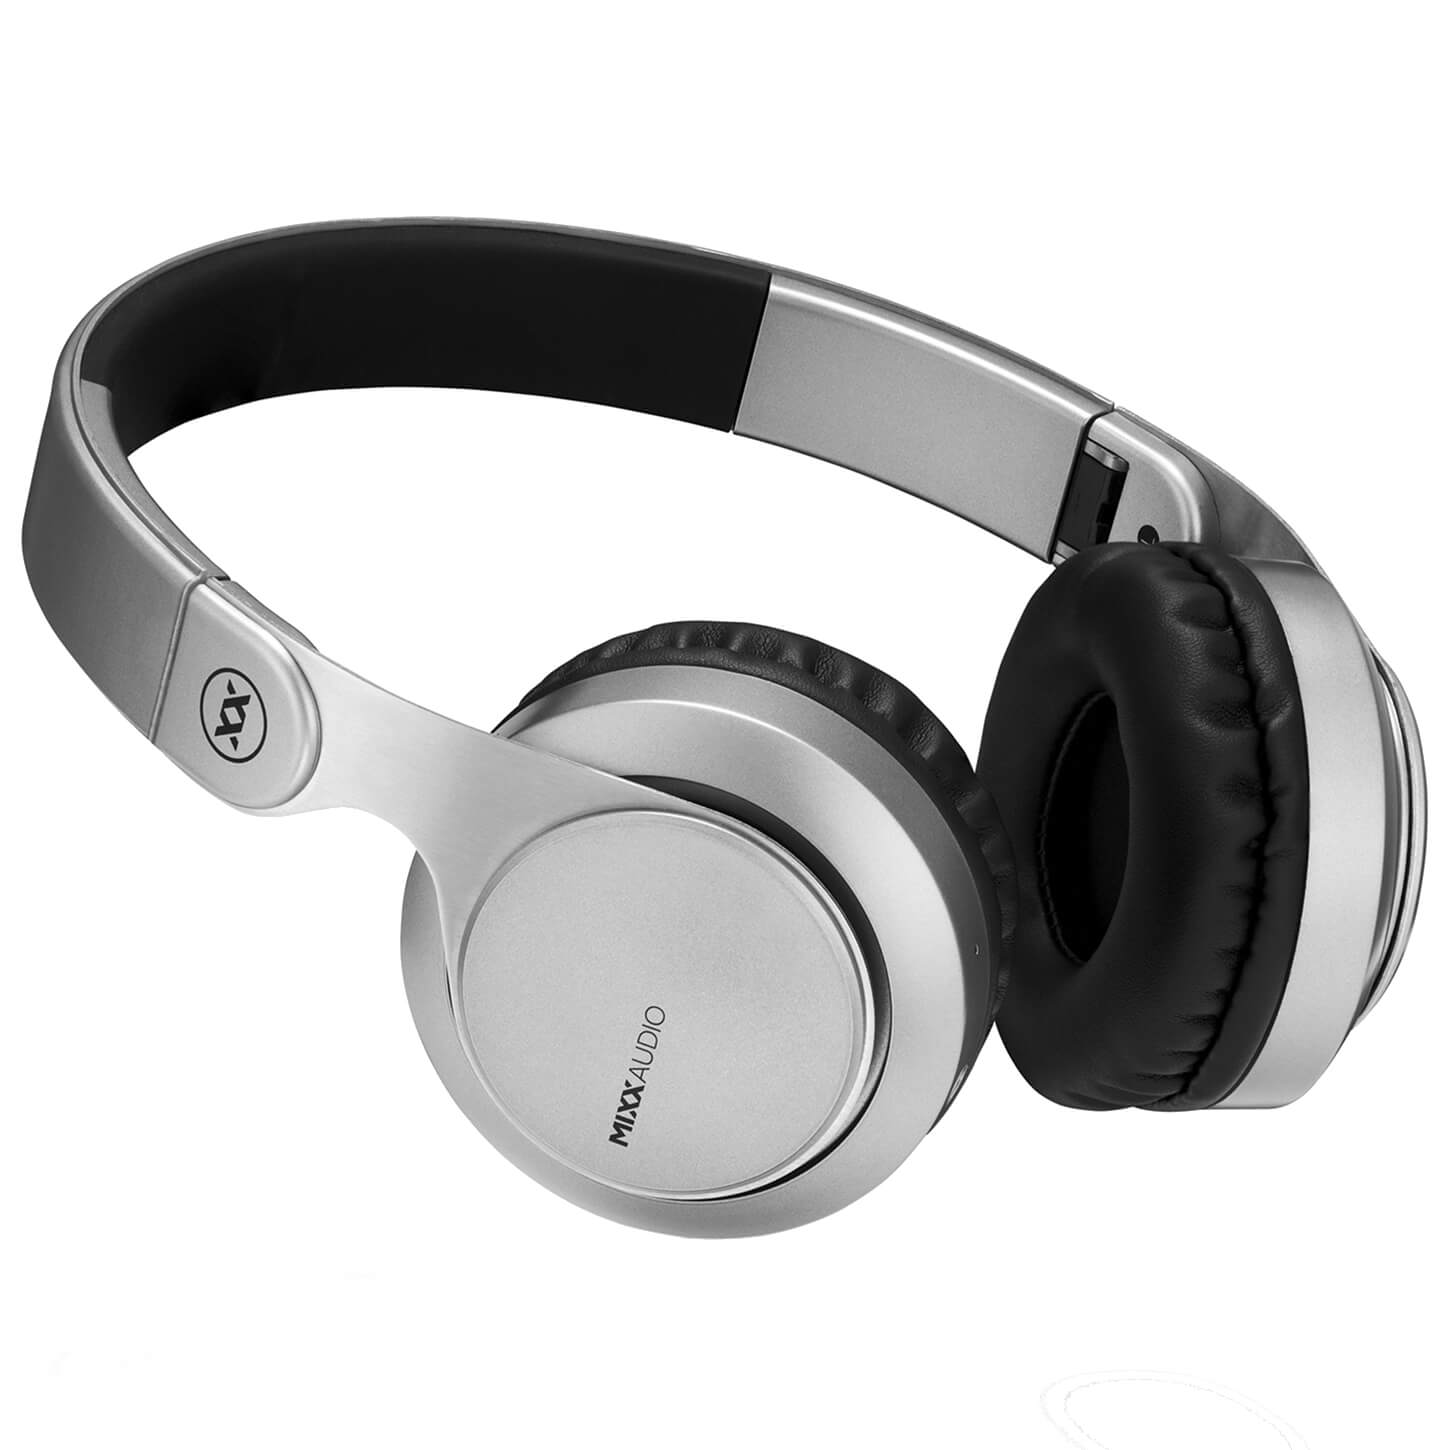 Mixx JX1 Bluetooth Wireless Headphones - Space Grey